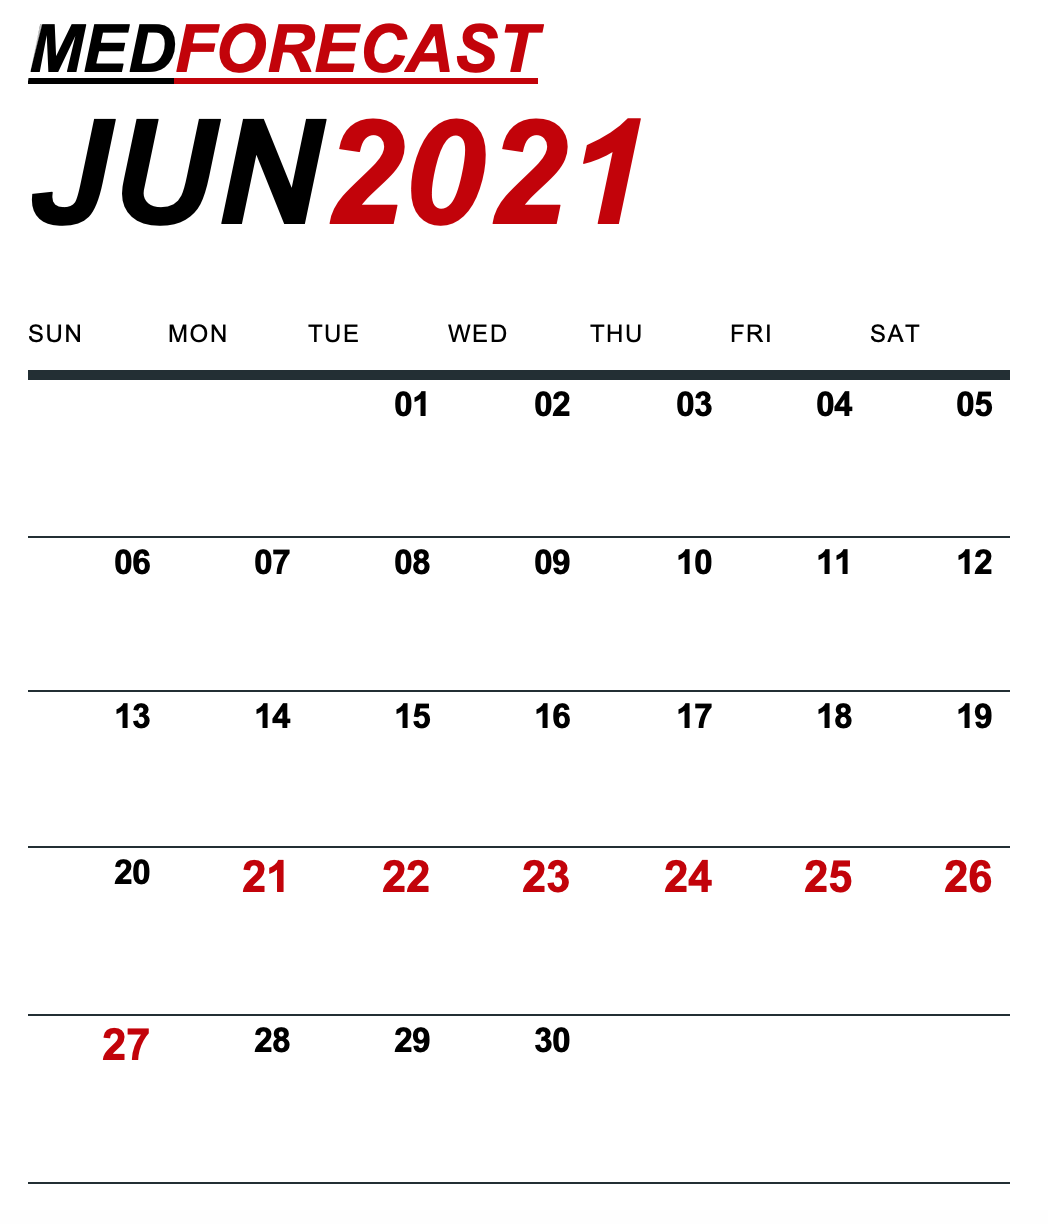 Medical News Forecast for June 21-27